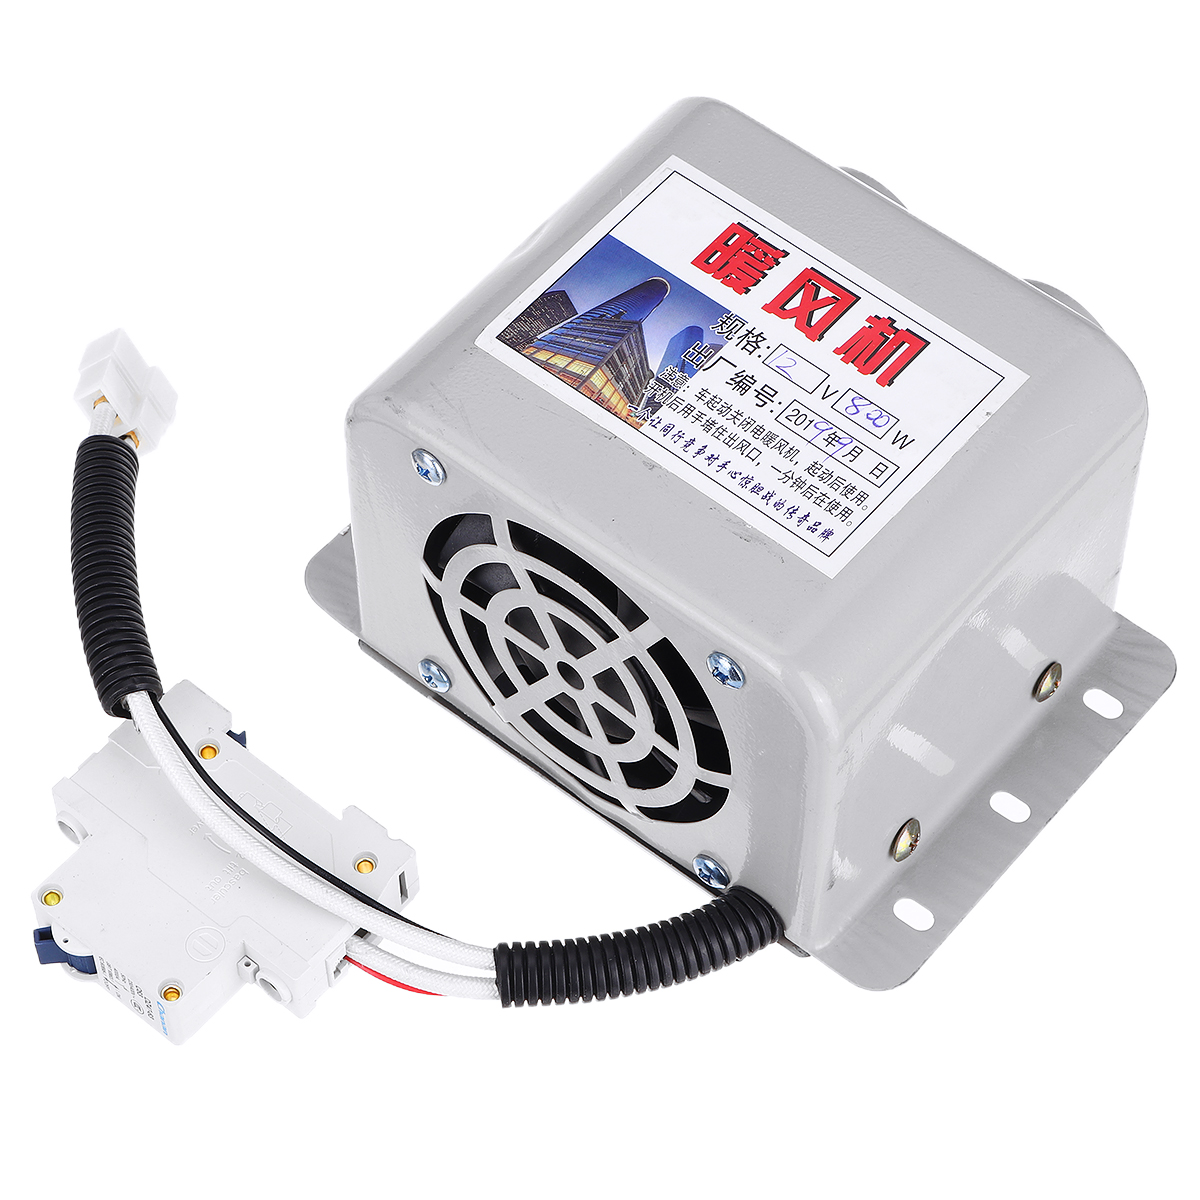 

12V/24V 1500W Car Air Heater Fan Silent Windscreen Demister Defroster Heating Warmer